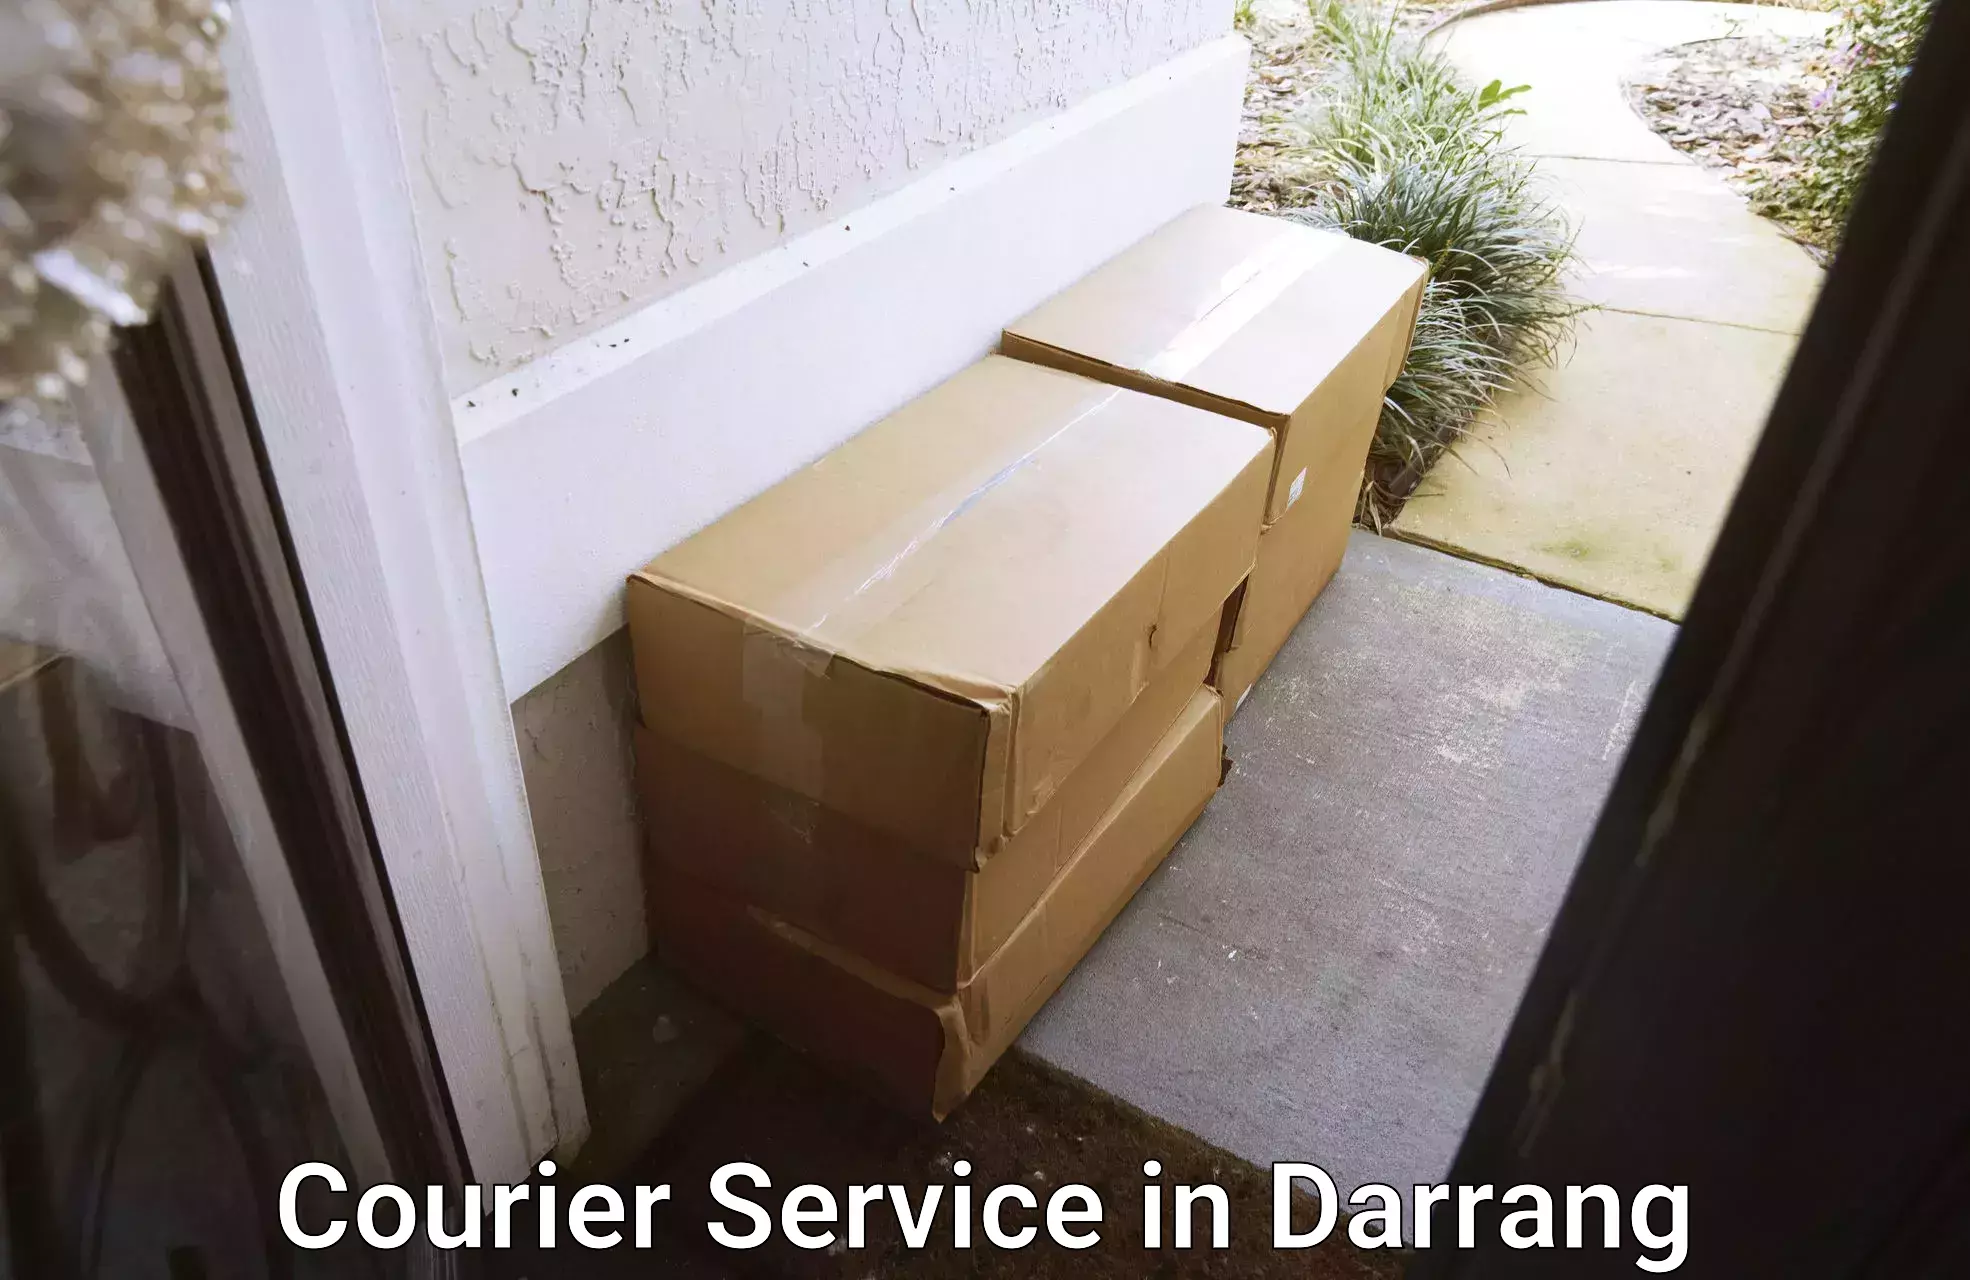 Express package handling in Darrang